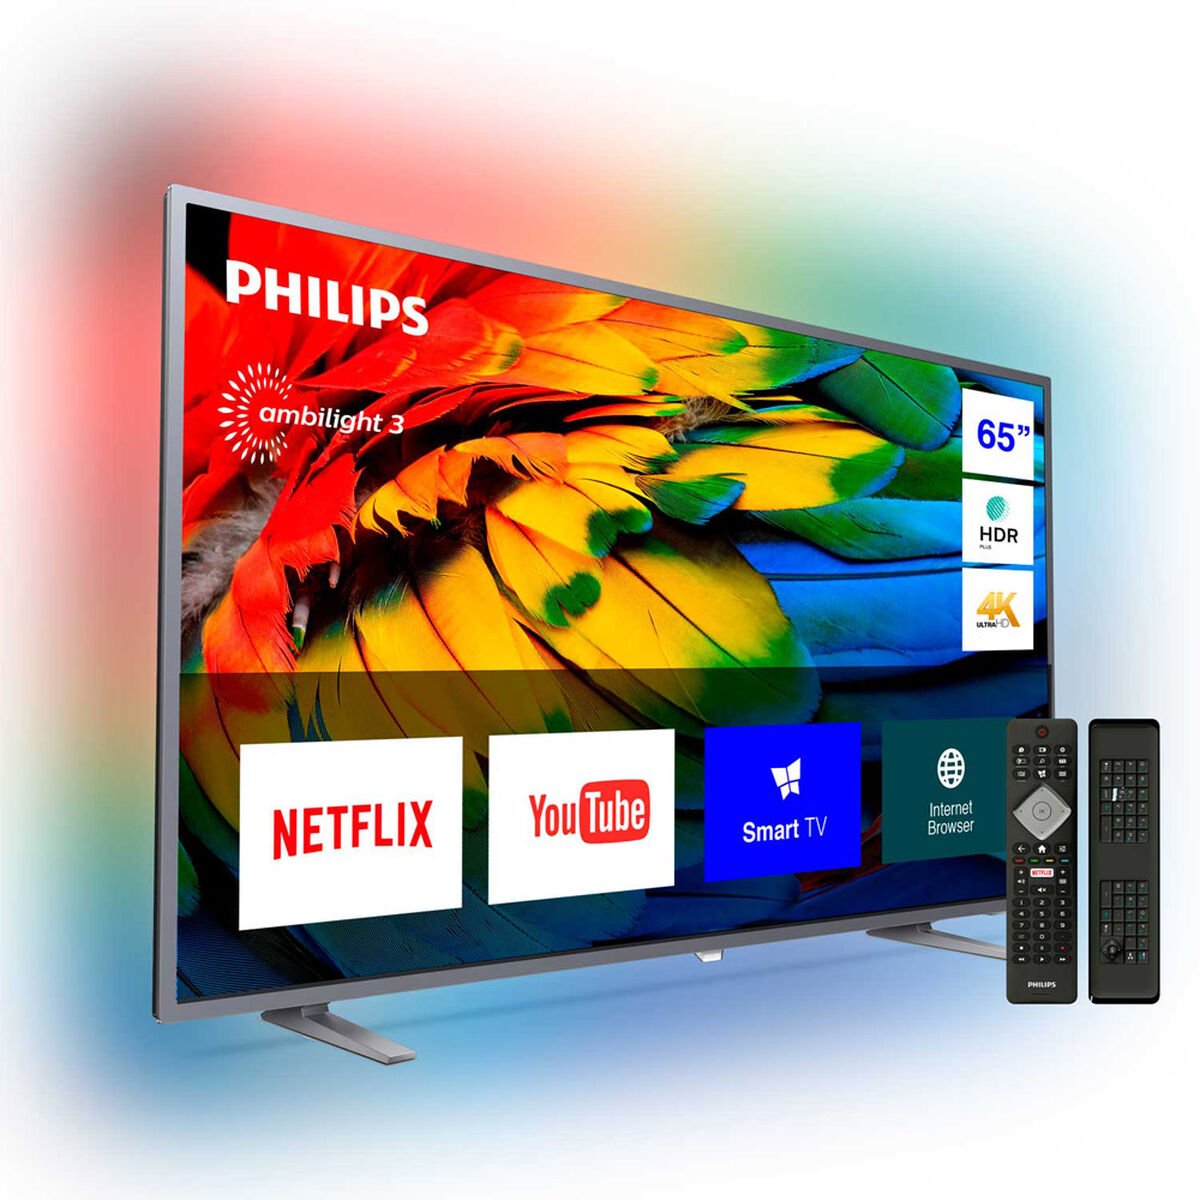 Pantalla Samsung 55 Pulgadas LED 4K Smart TV Serie 6400 a precio